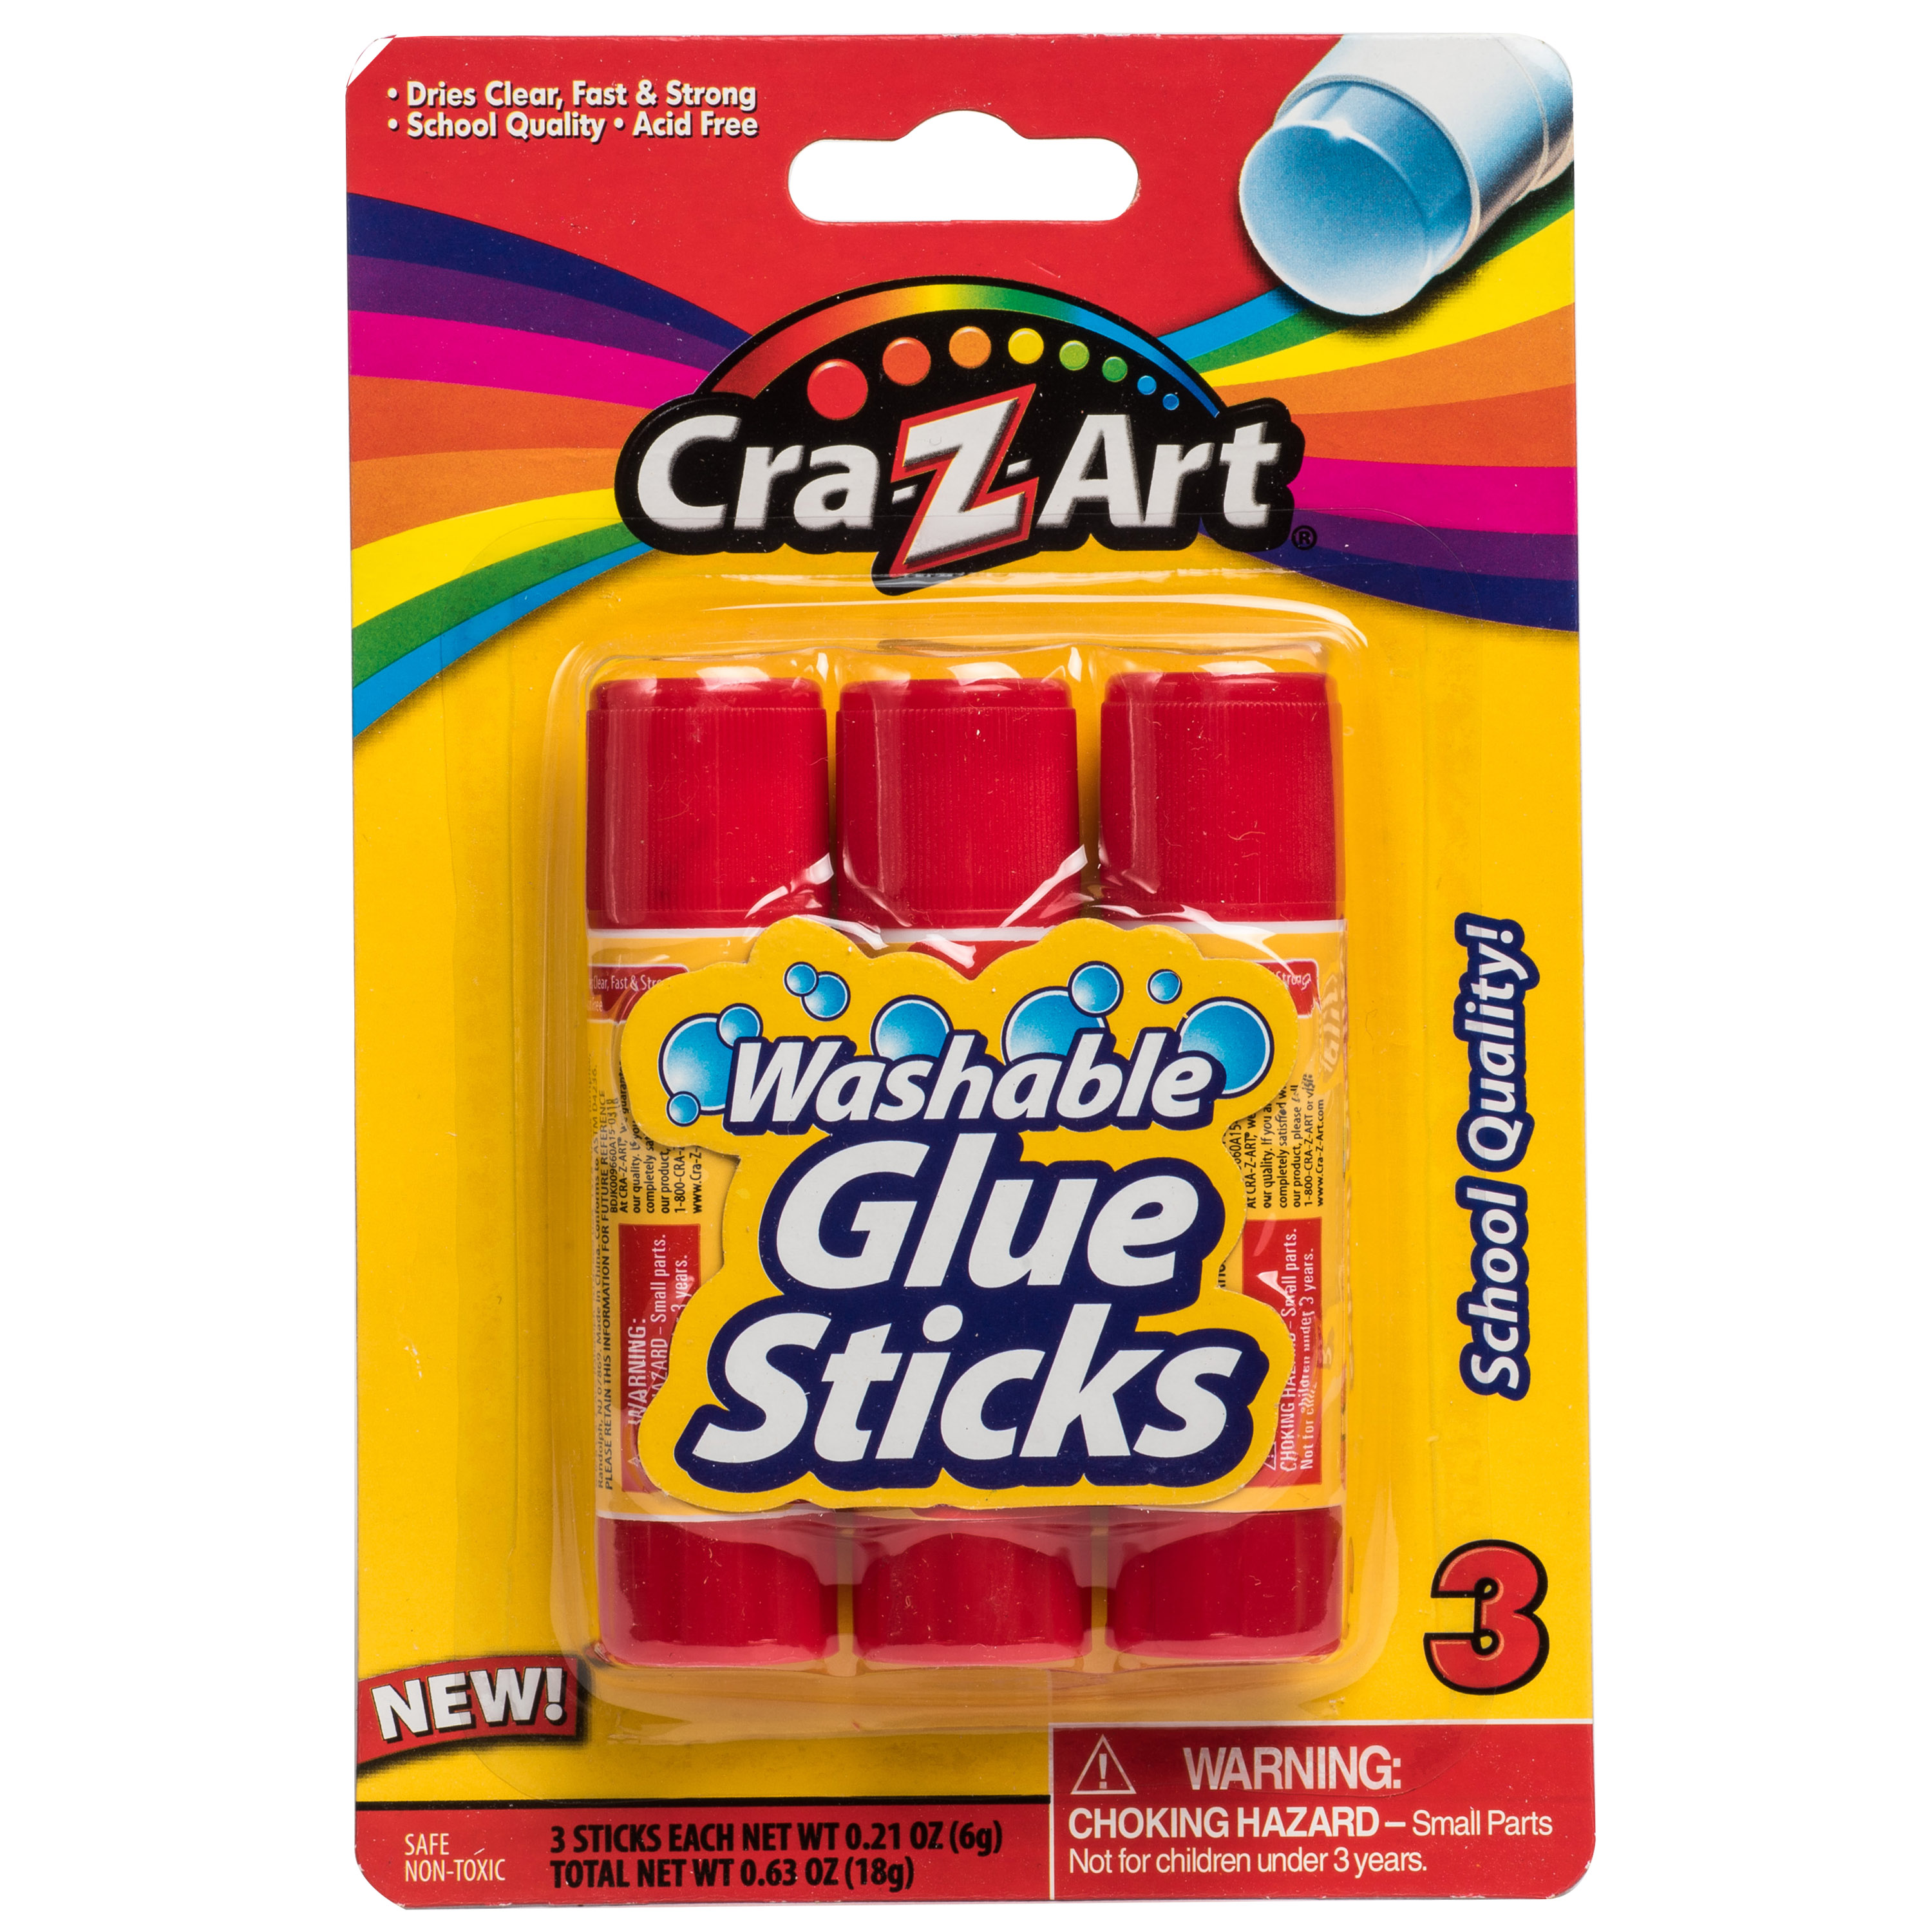 Cra-Z-Art Washable Glue Sticks, School Quality, 3 Count - image 1 of 12